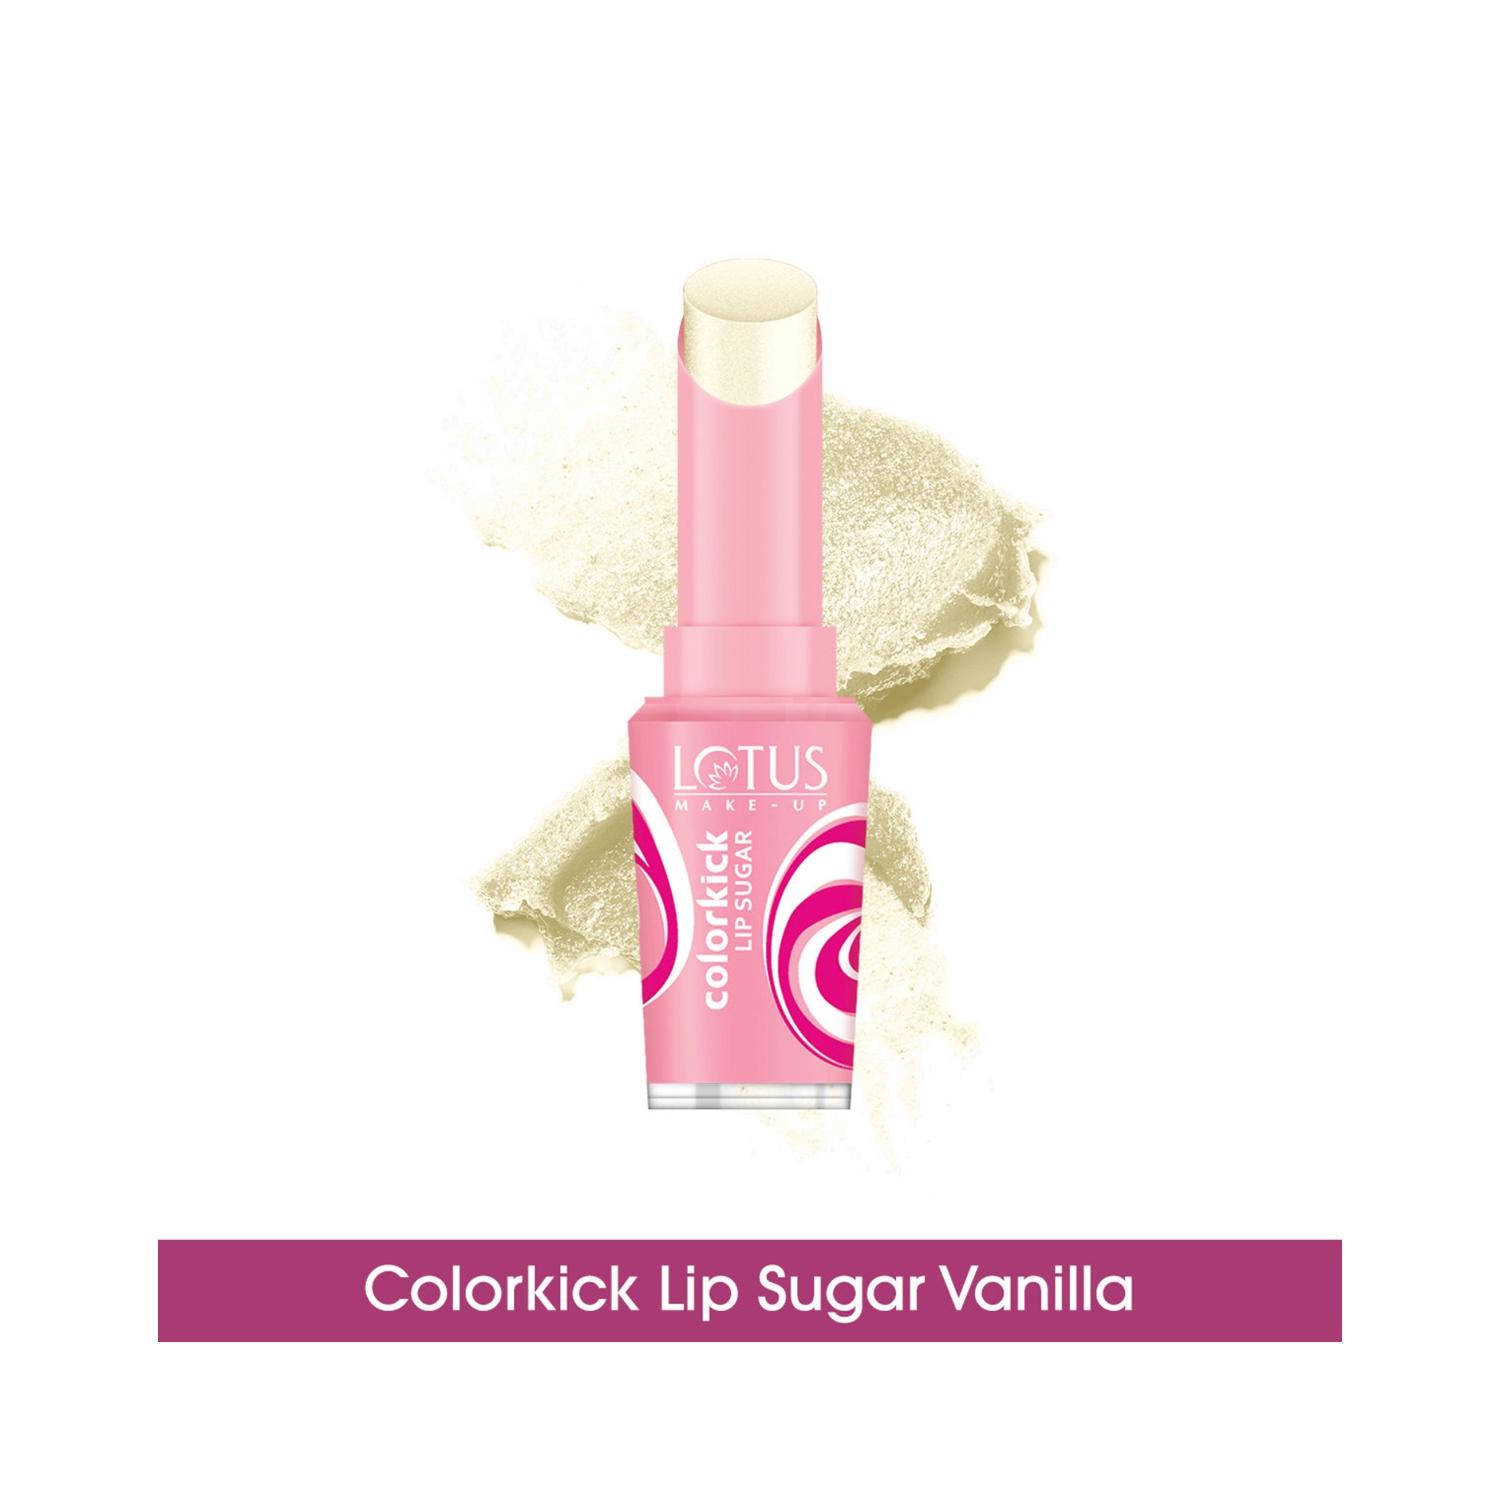 lotus makeup colorkick lip sugar spf 20 - s6 vanilla (3g)